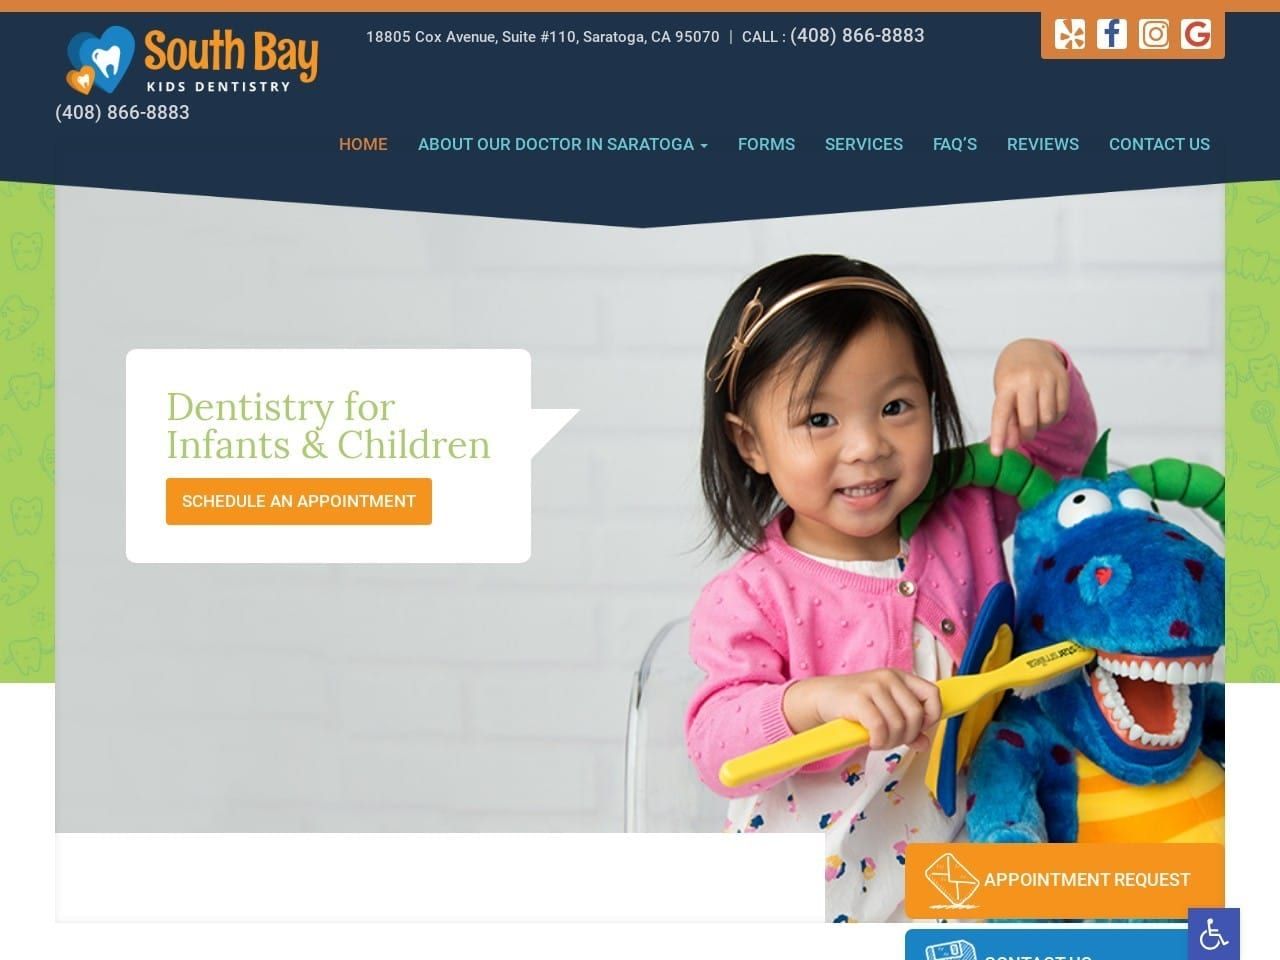 South Bay Kids Dentistry Website Screenshot From Url Southbaykidsdentistry.com